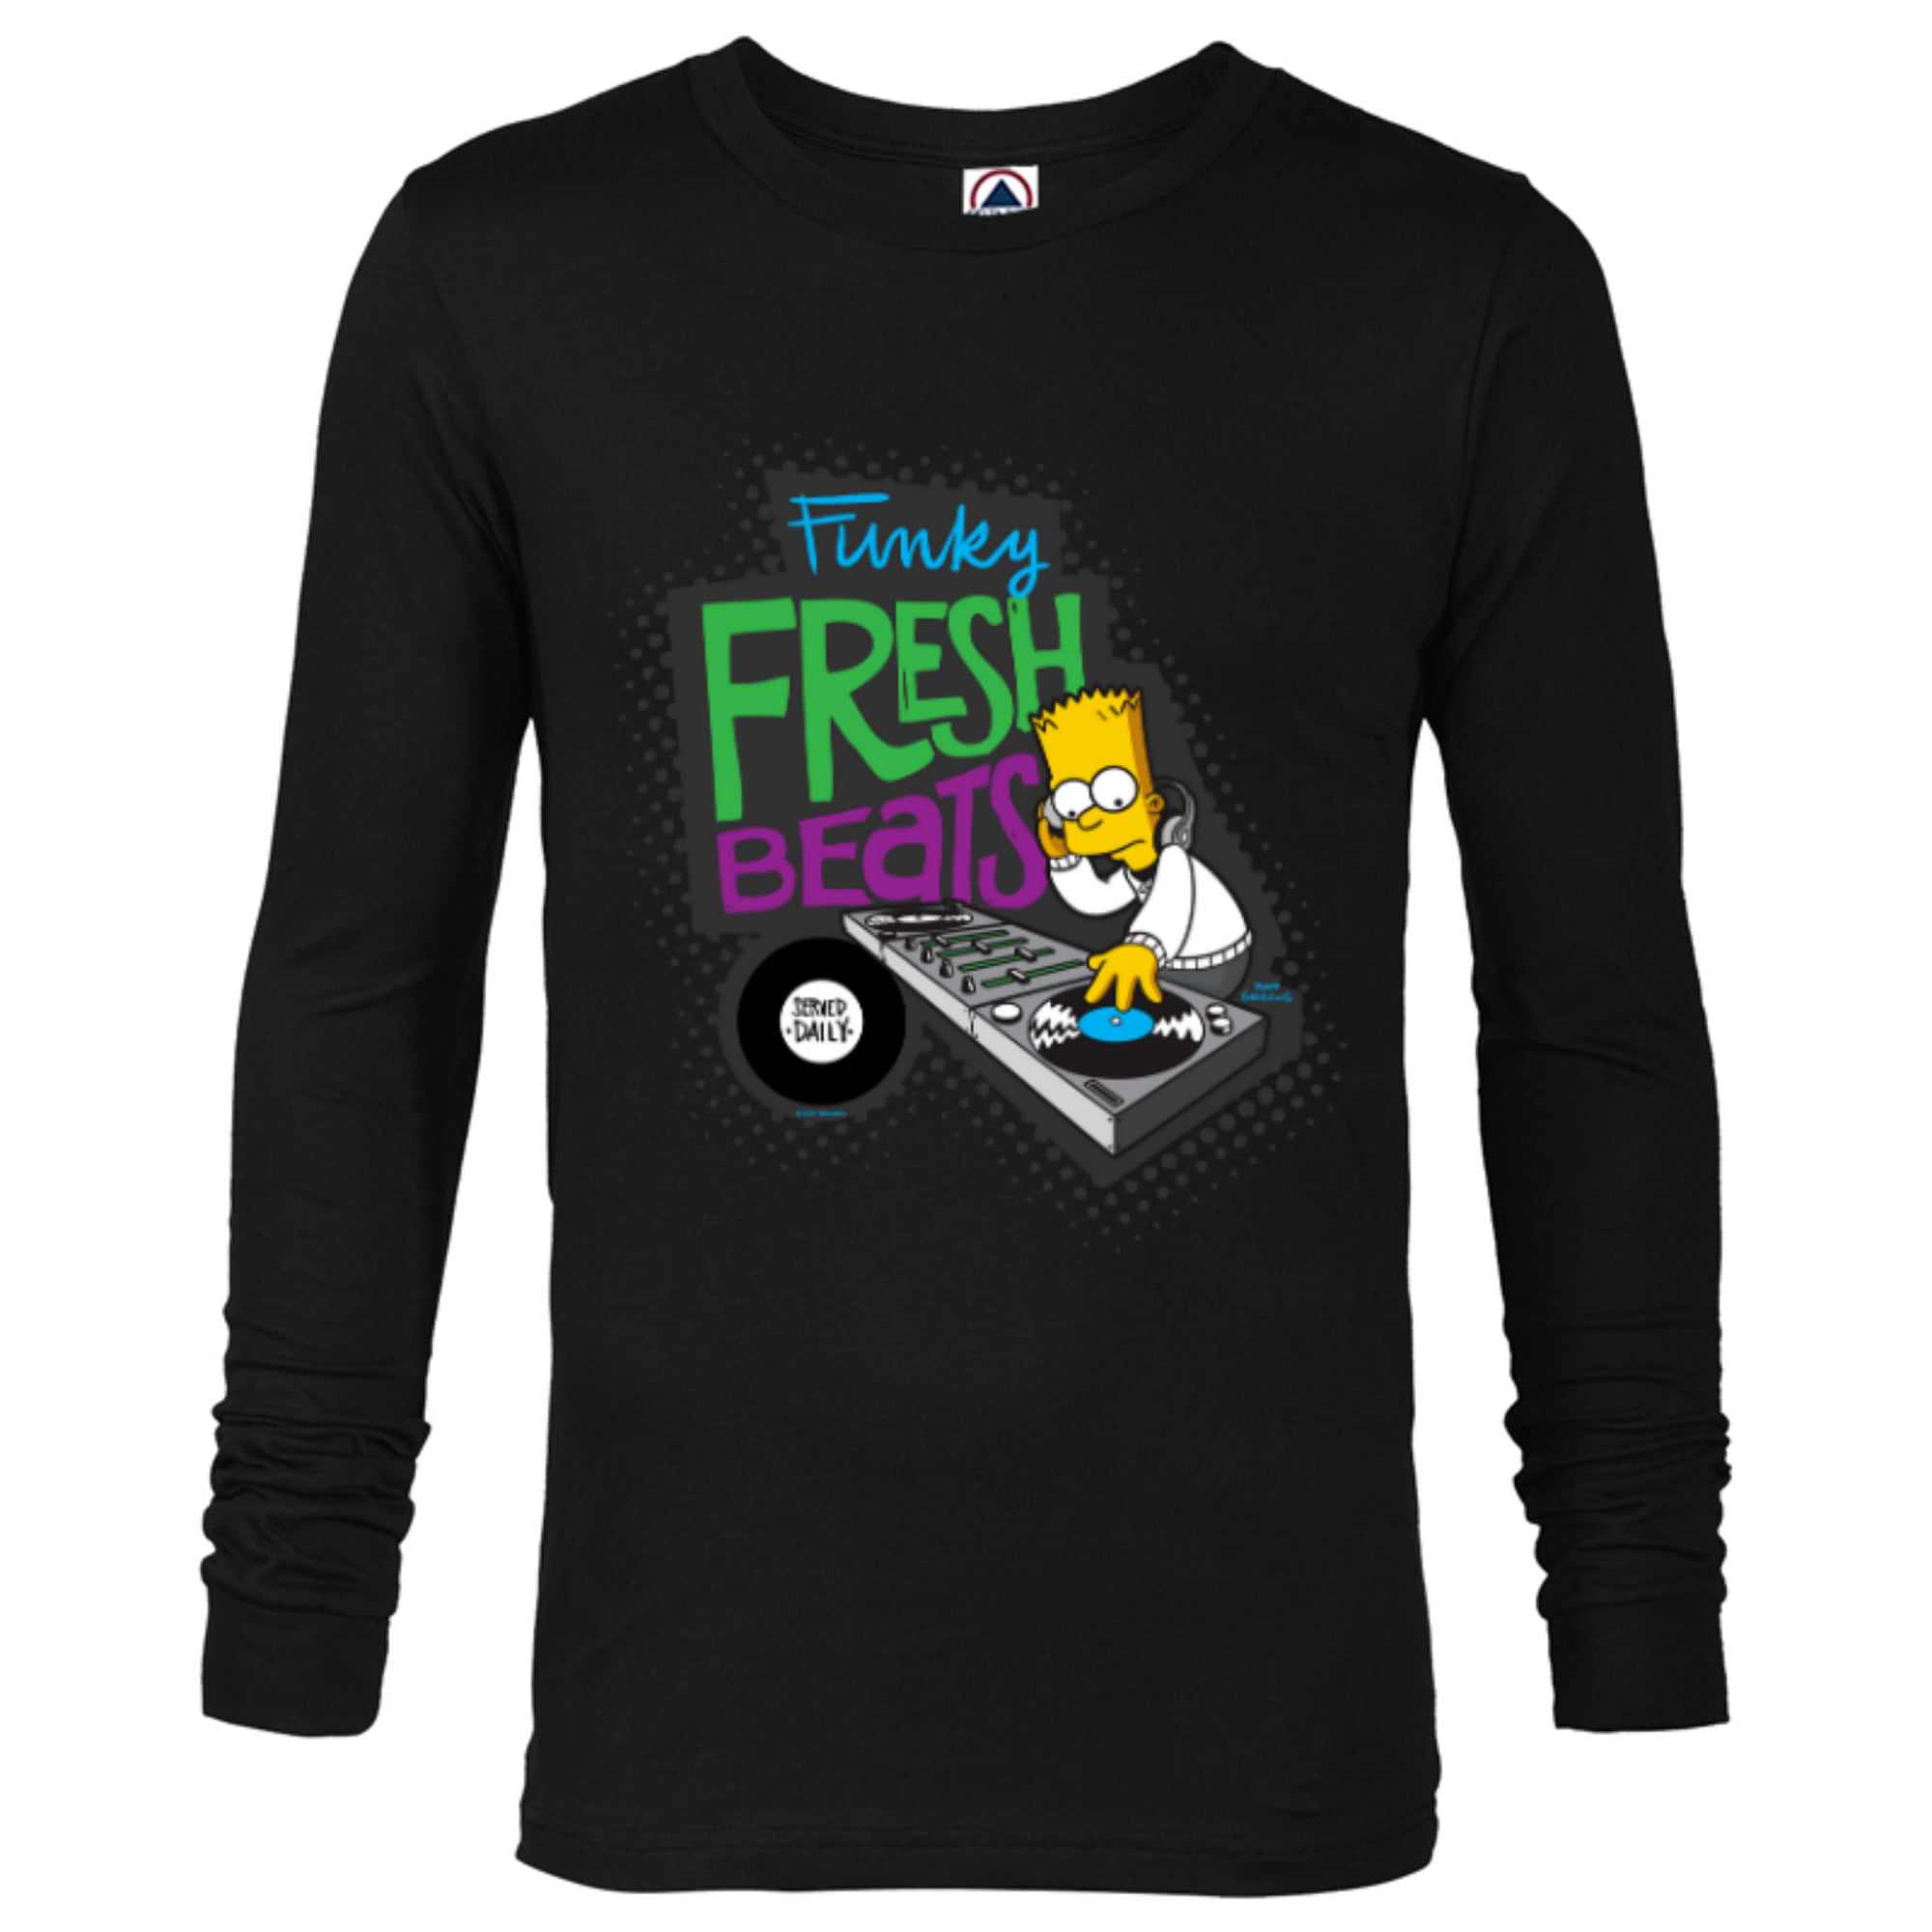 helgen fantom Badekar The Simpsons Bart Simpson Funky Fresh Beats Served Daily - Long Sleeve T- Shirt for Men - Customized-Black - Walmart.com